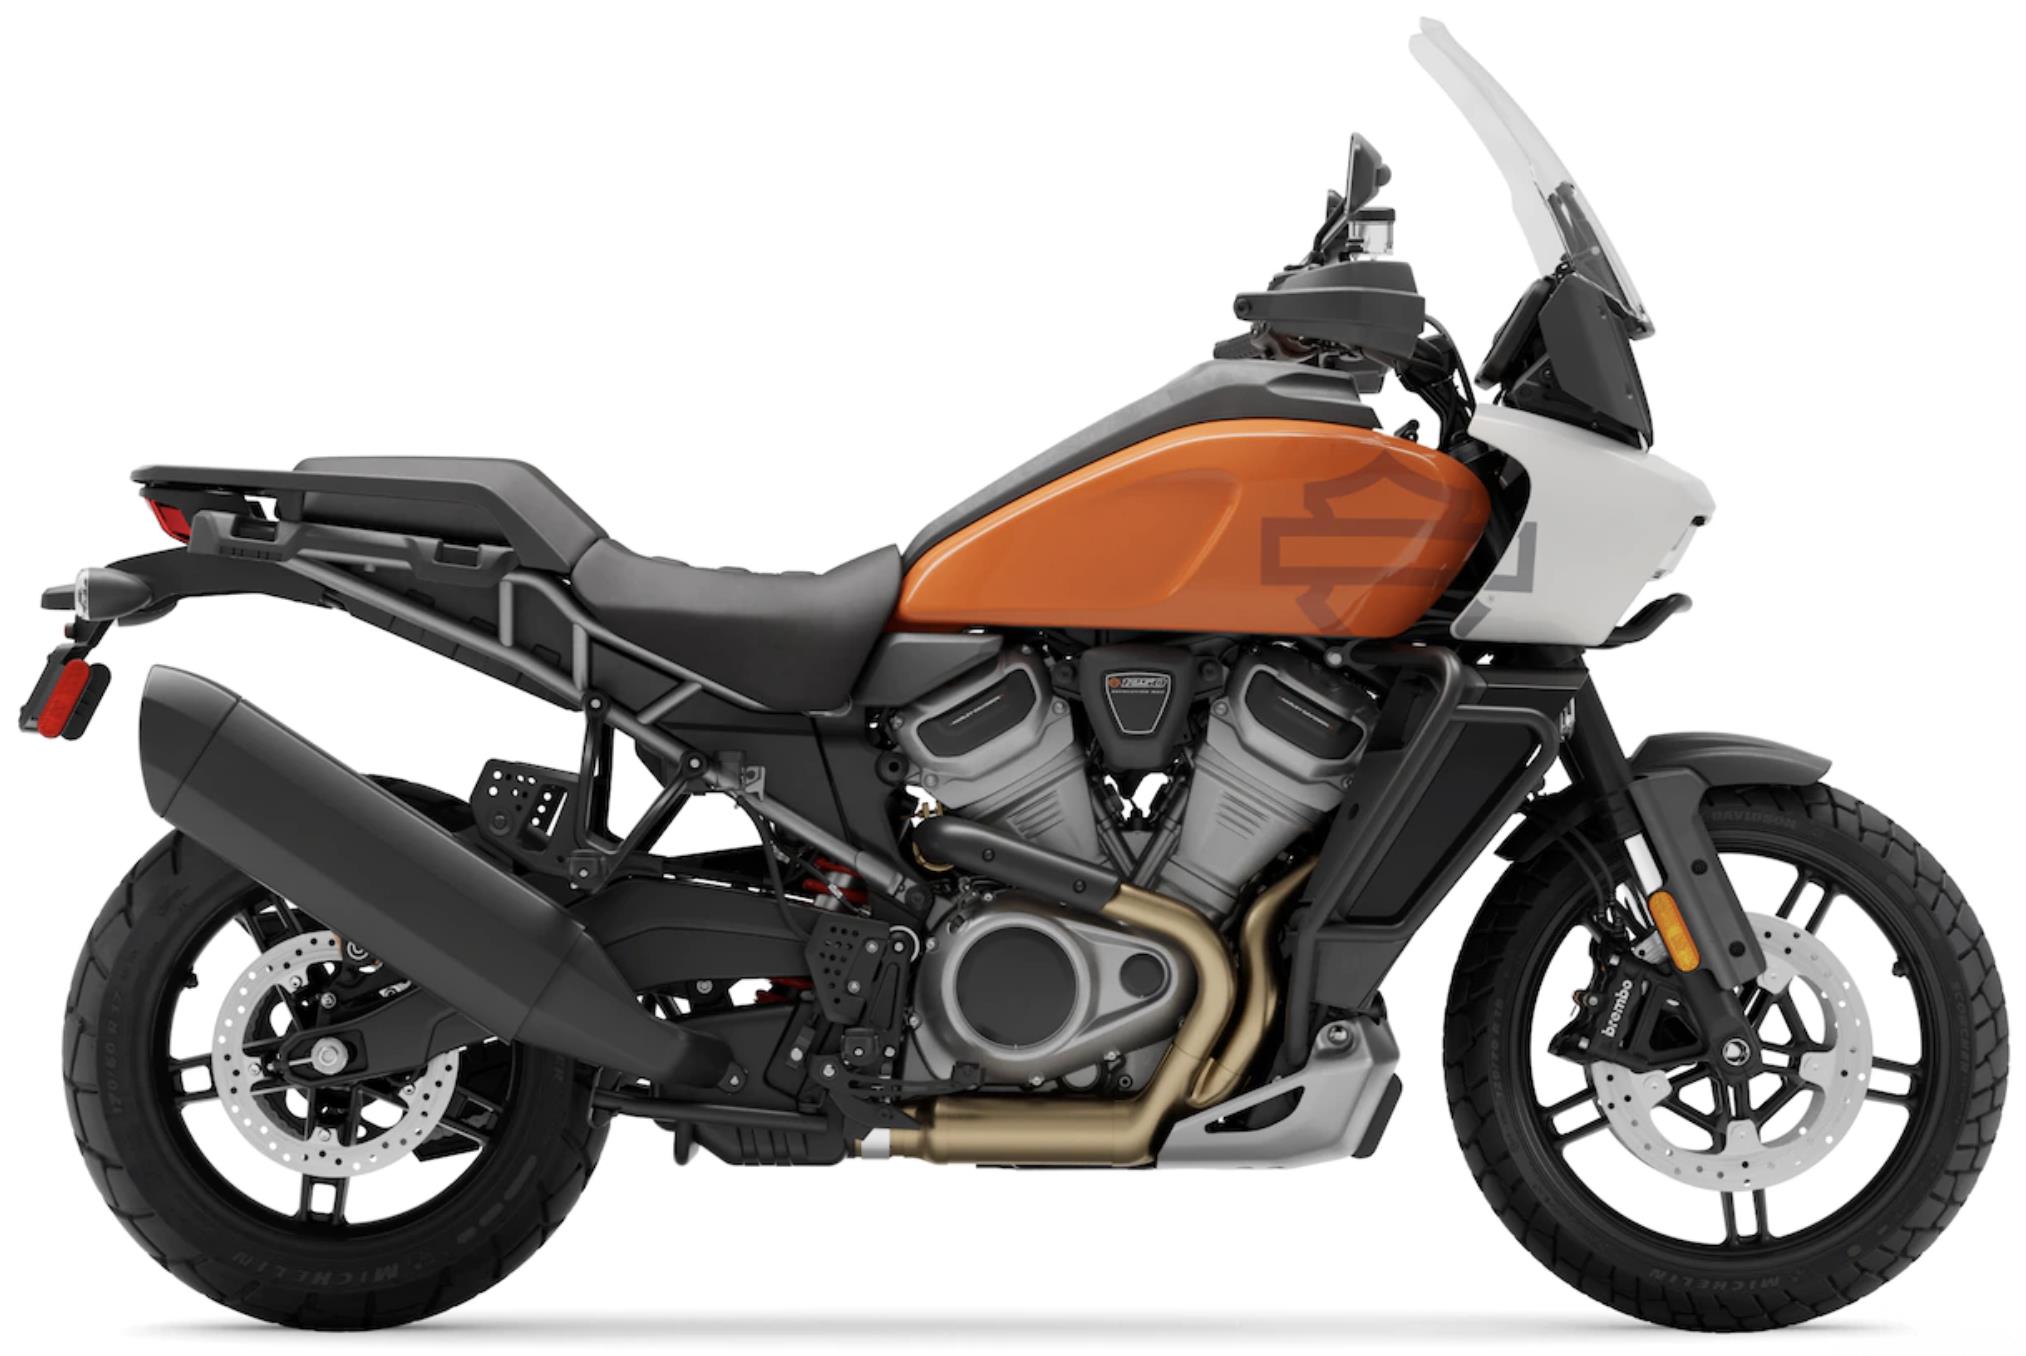 2021 Harley Davidson Pan America 1250 Special Price In India